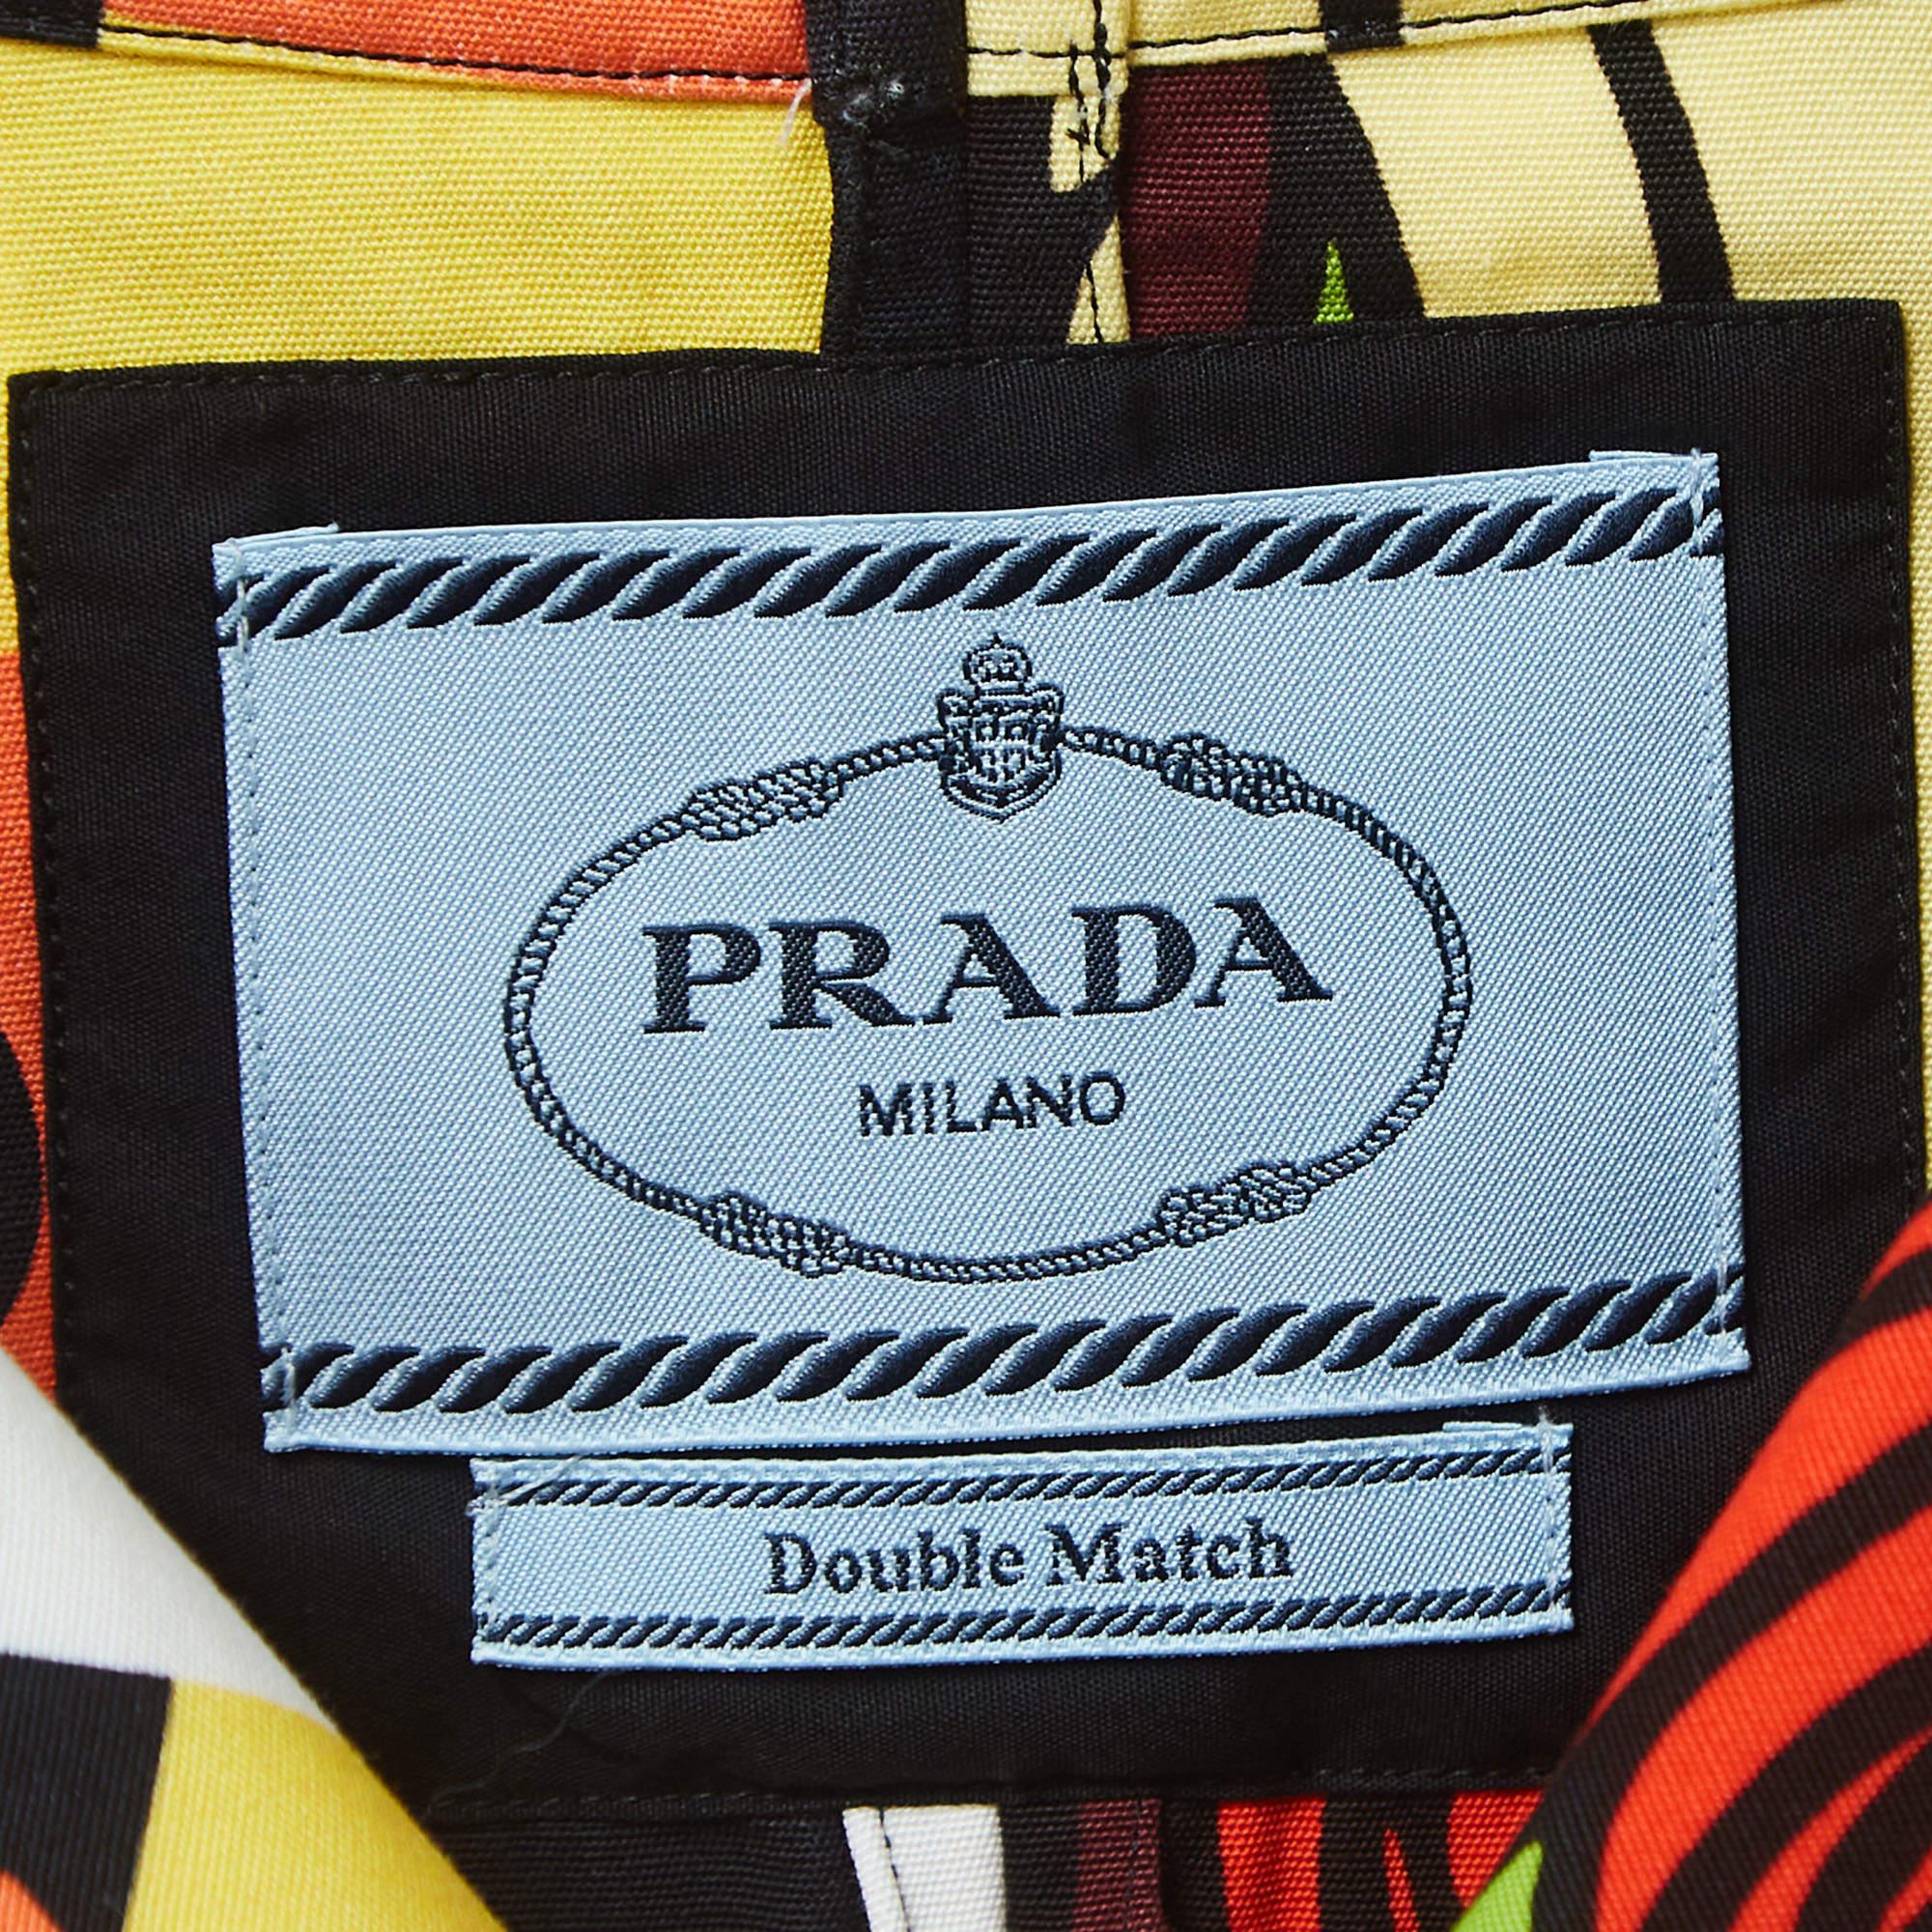 Prada Double Match Multicolor Printed Cotton Short Sleeve Shirt M 1